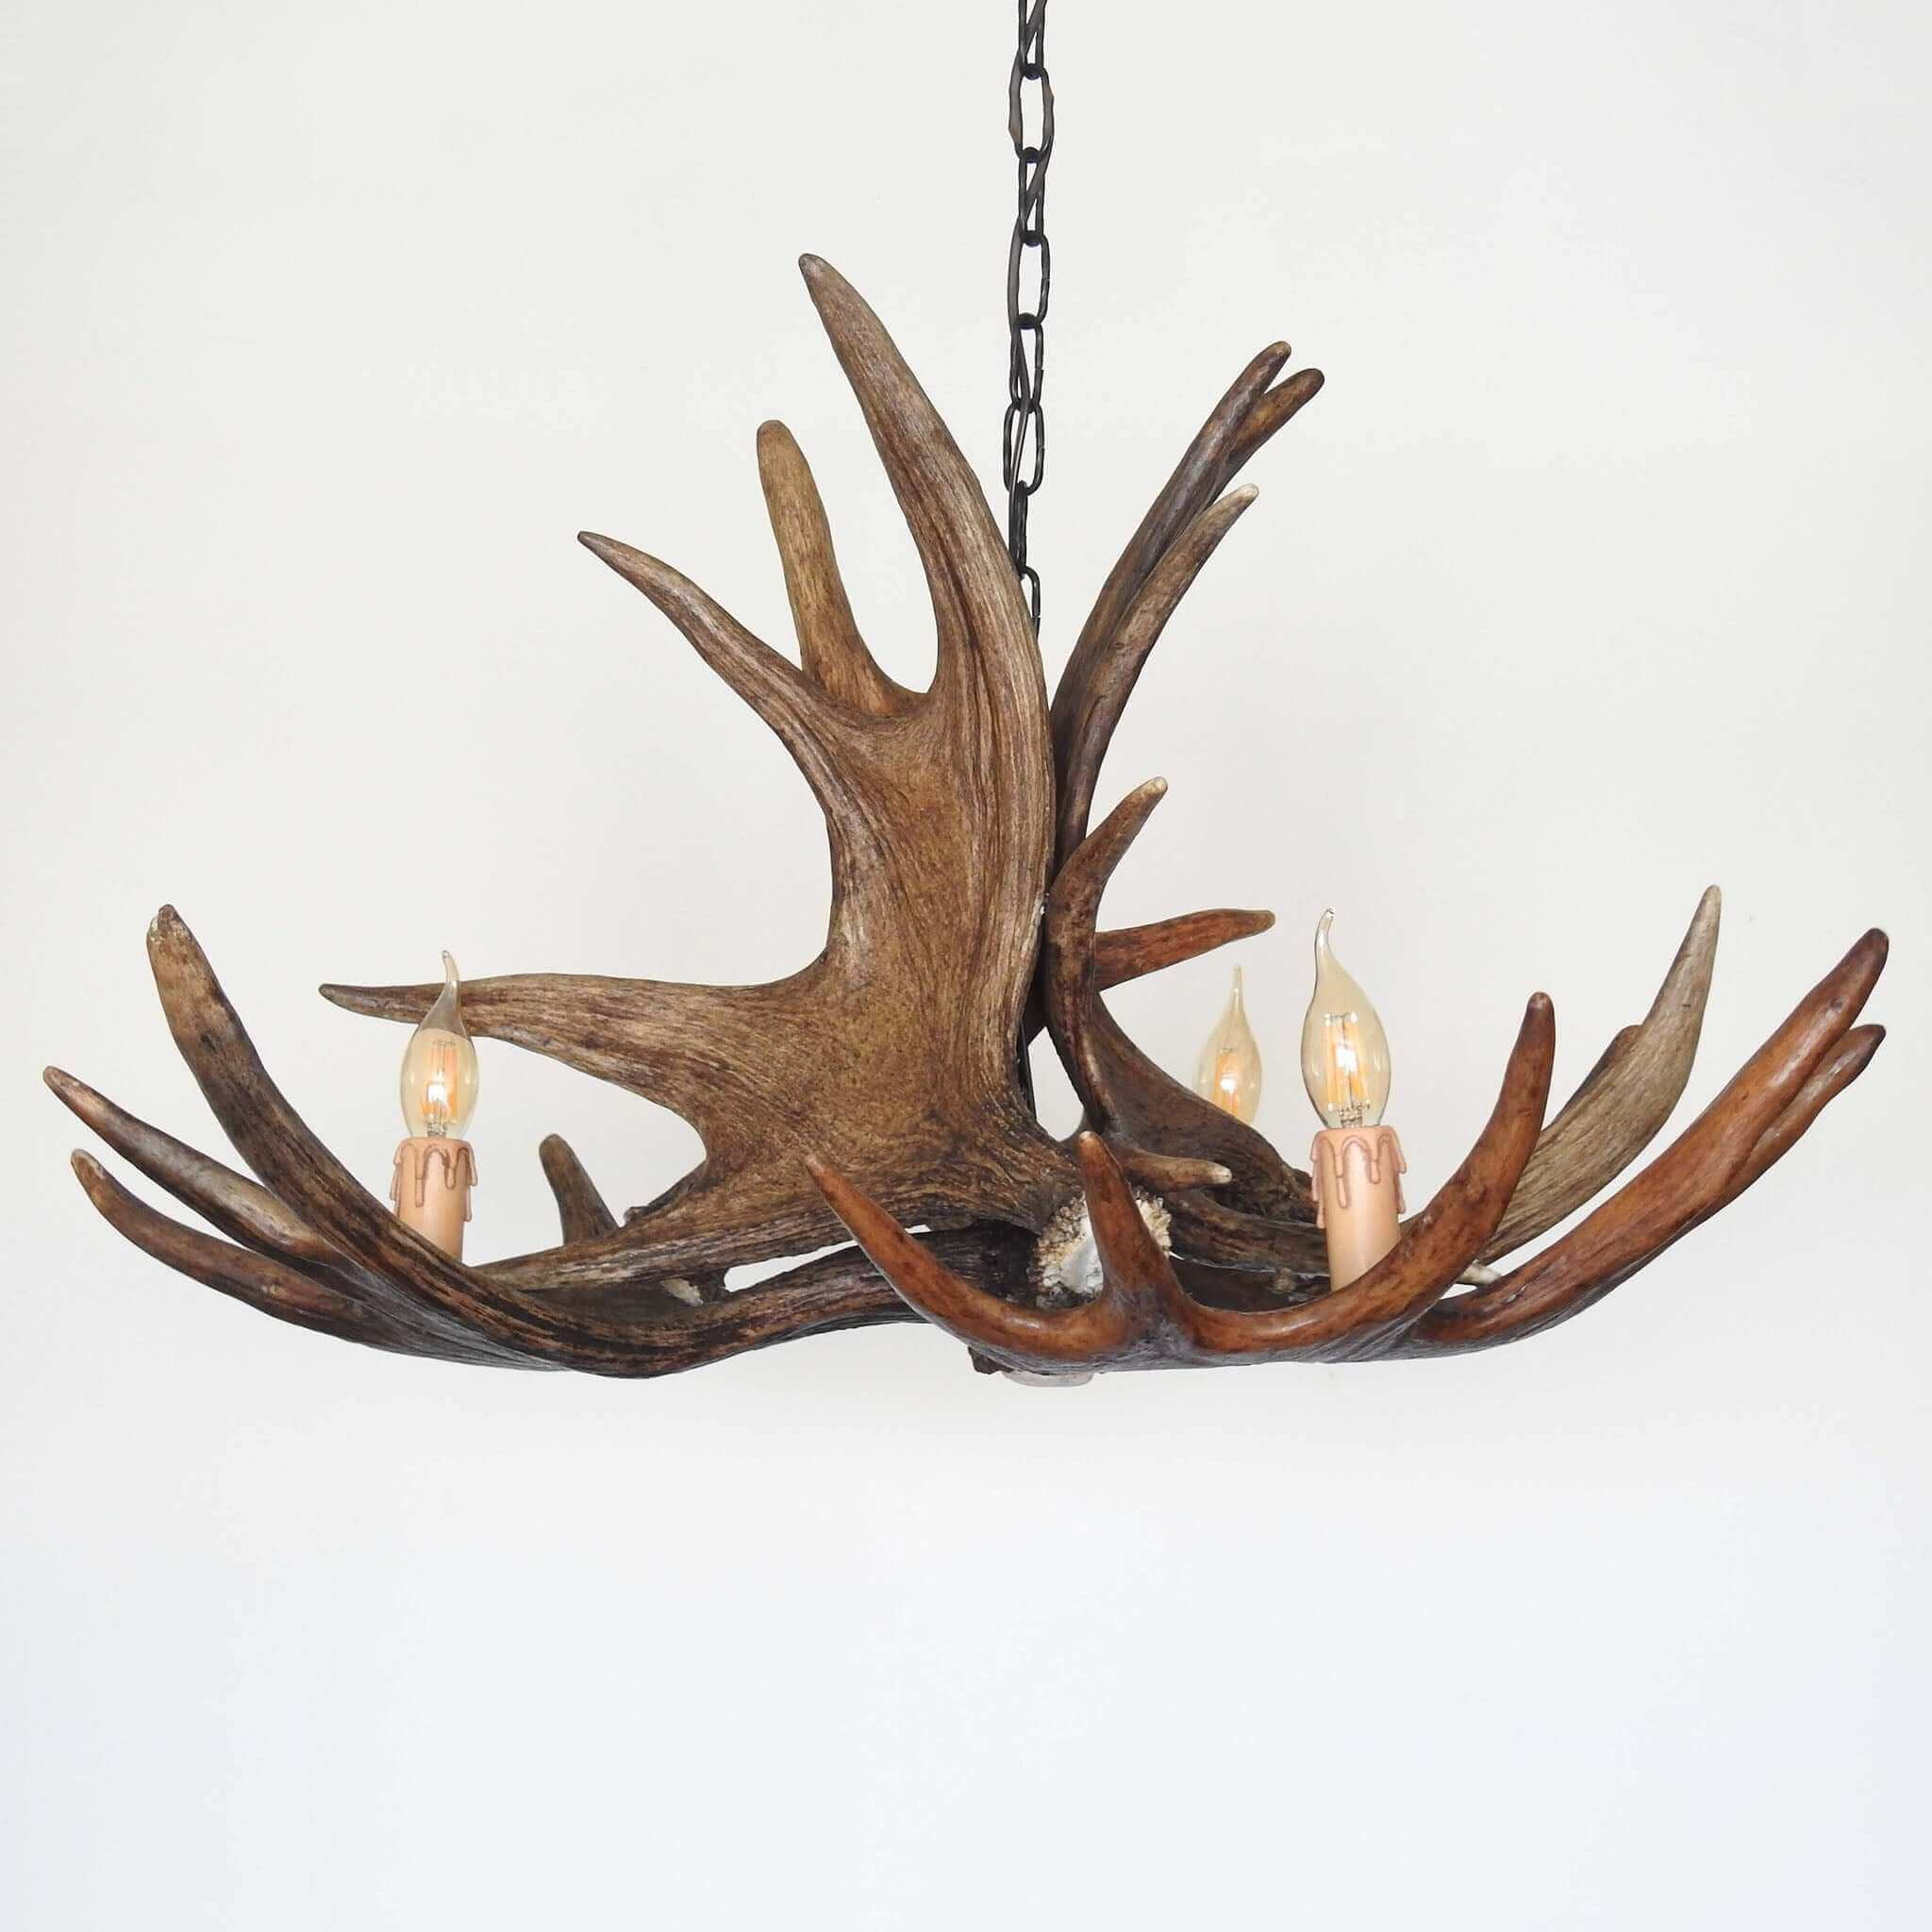 Real, large antler chandelier made of moose antlers.